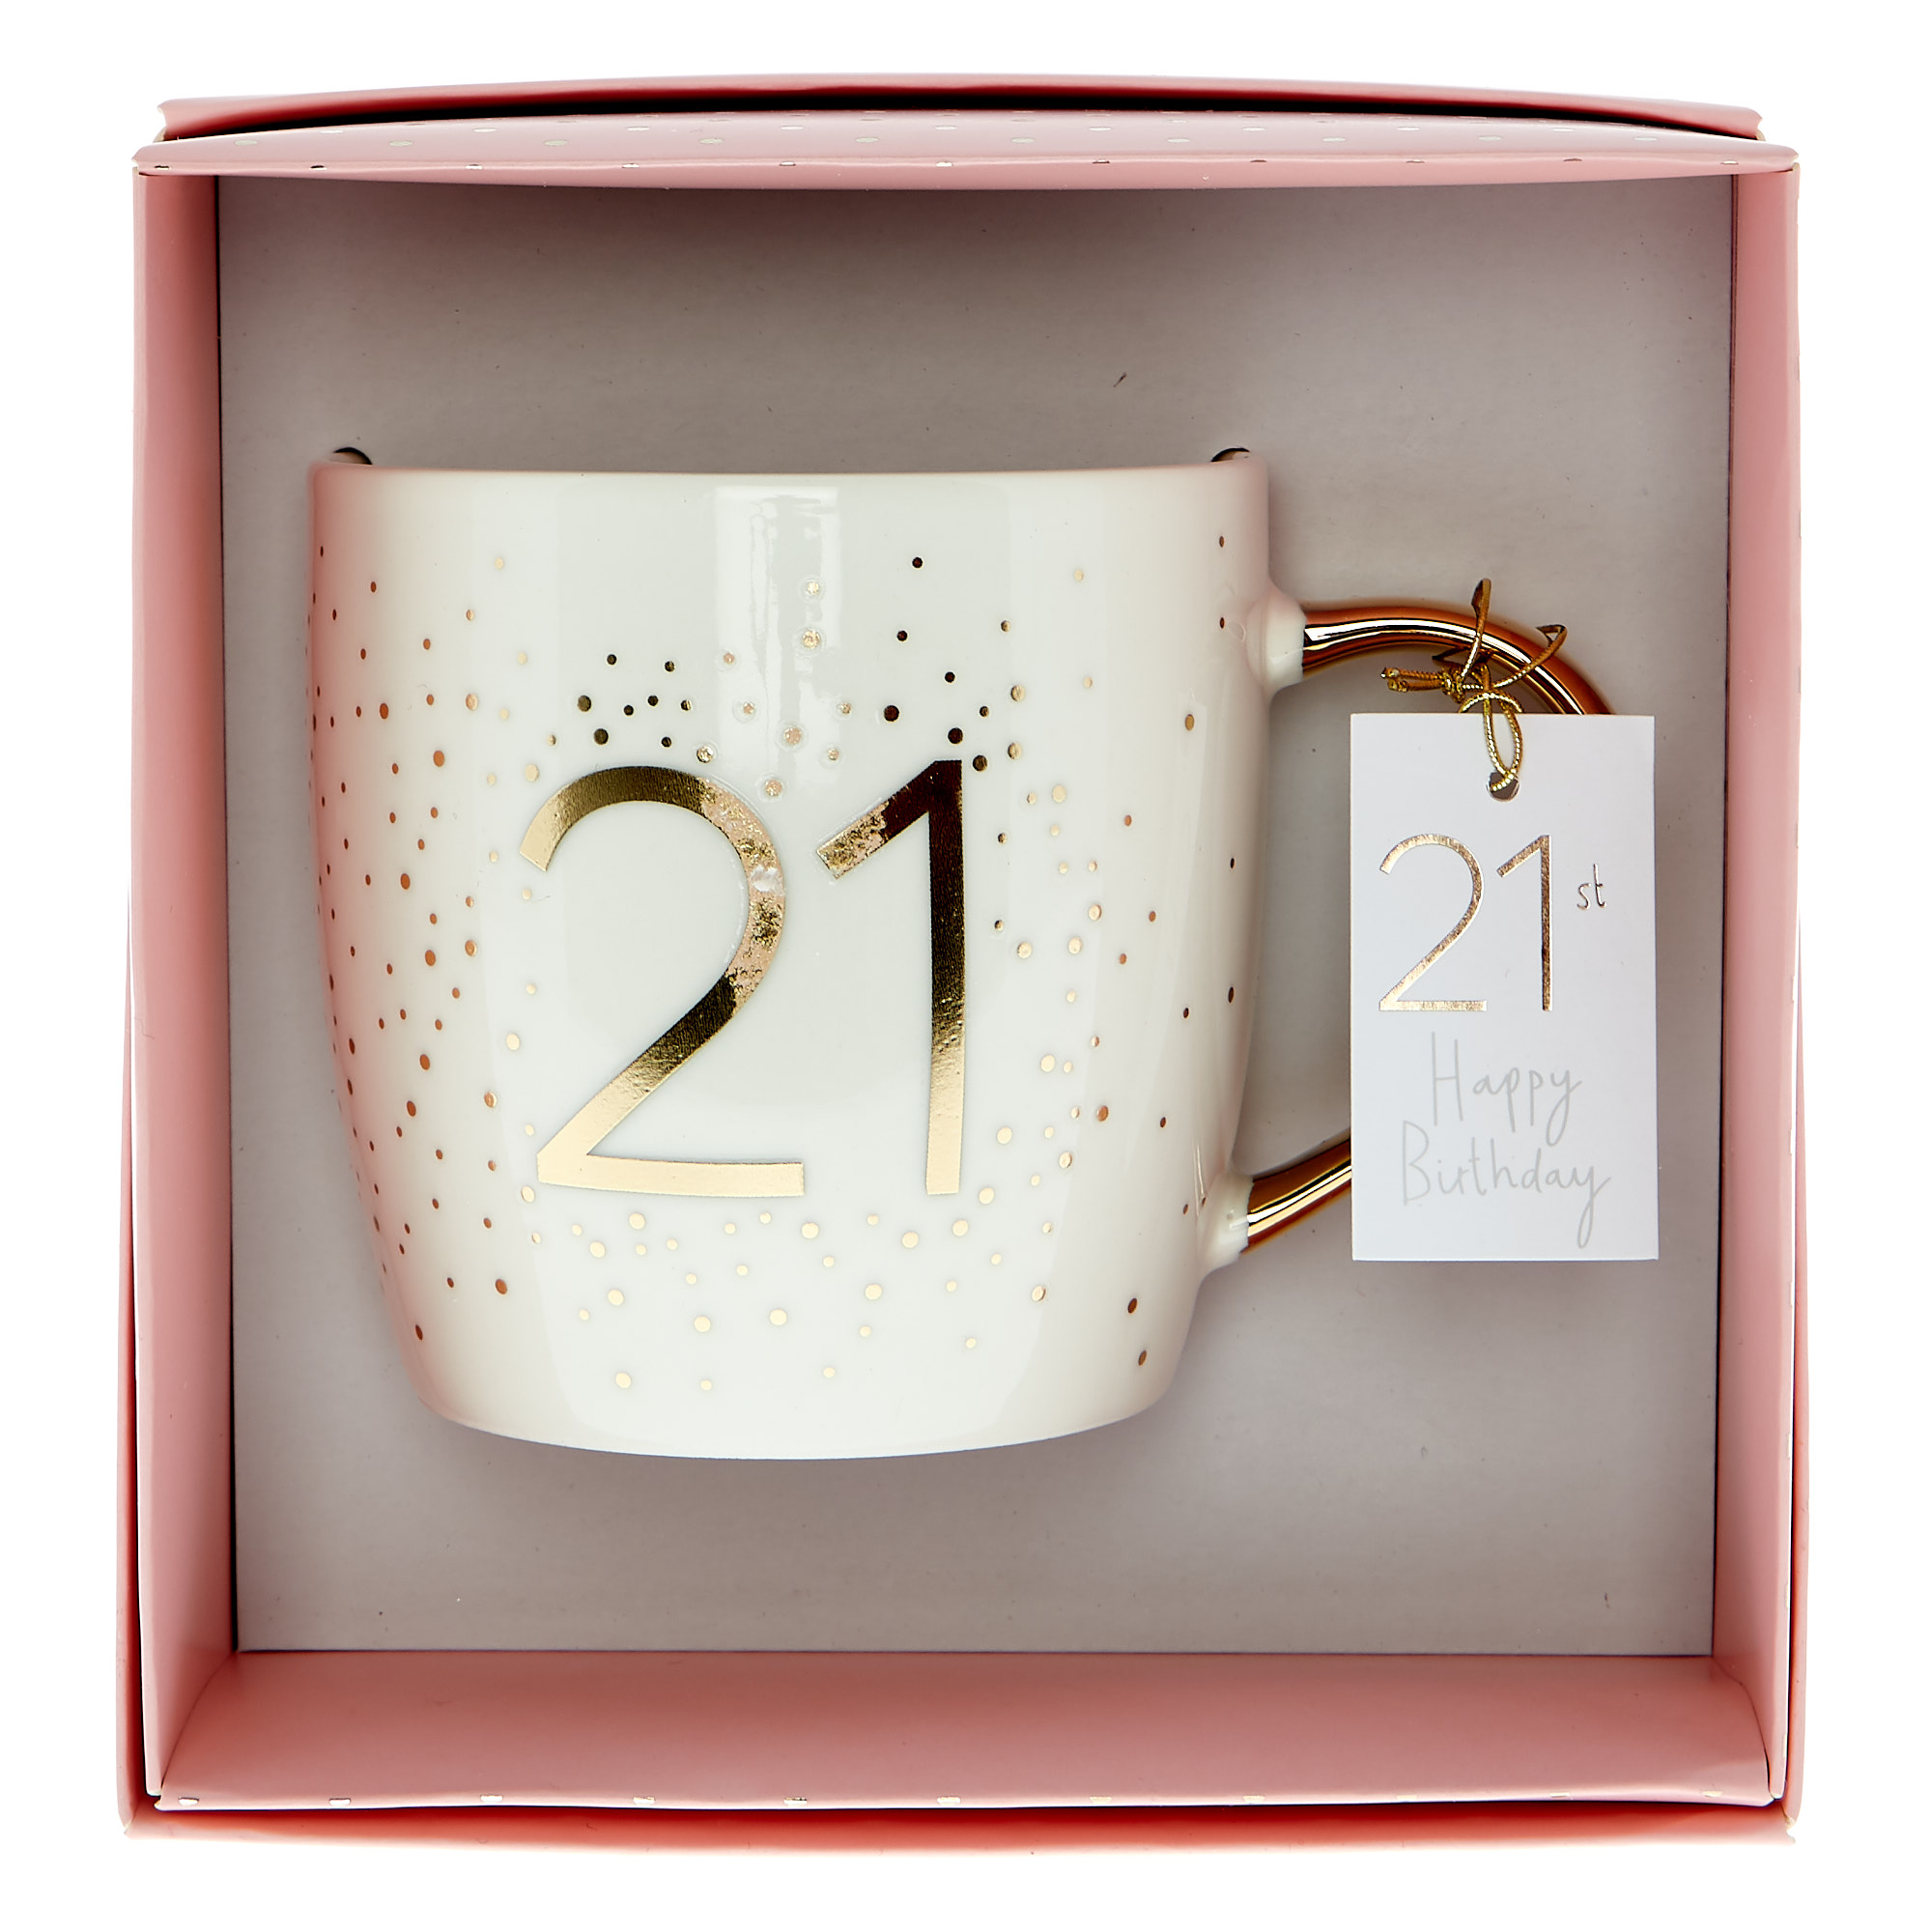 21st Birthday Mug In A Box - Happy Birthday To You